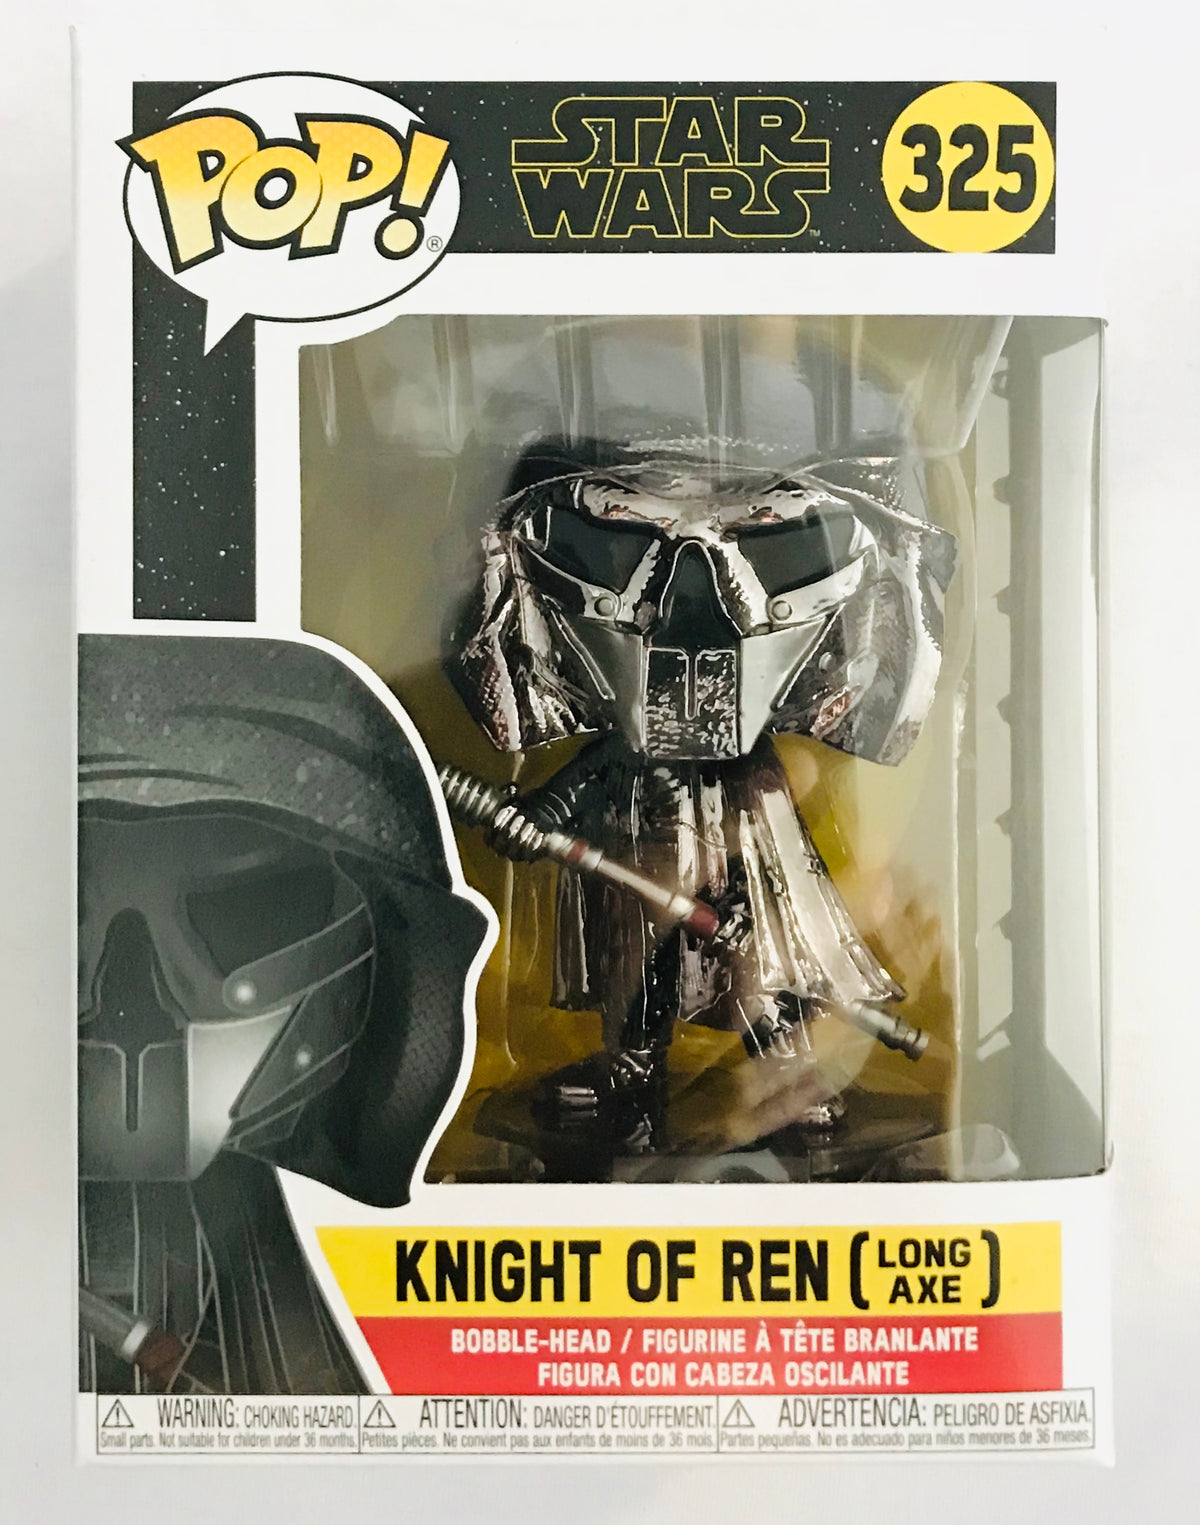 Knight of Ren (Long Axe) (325)